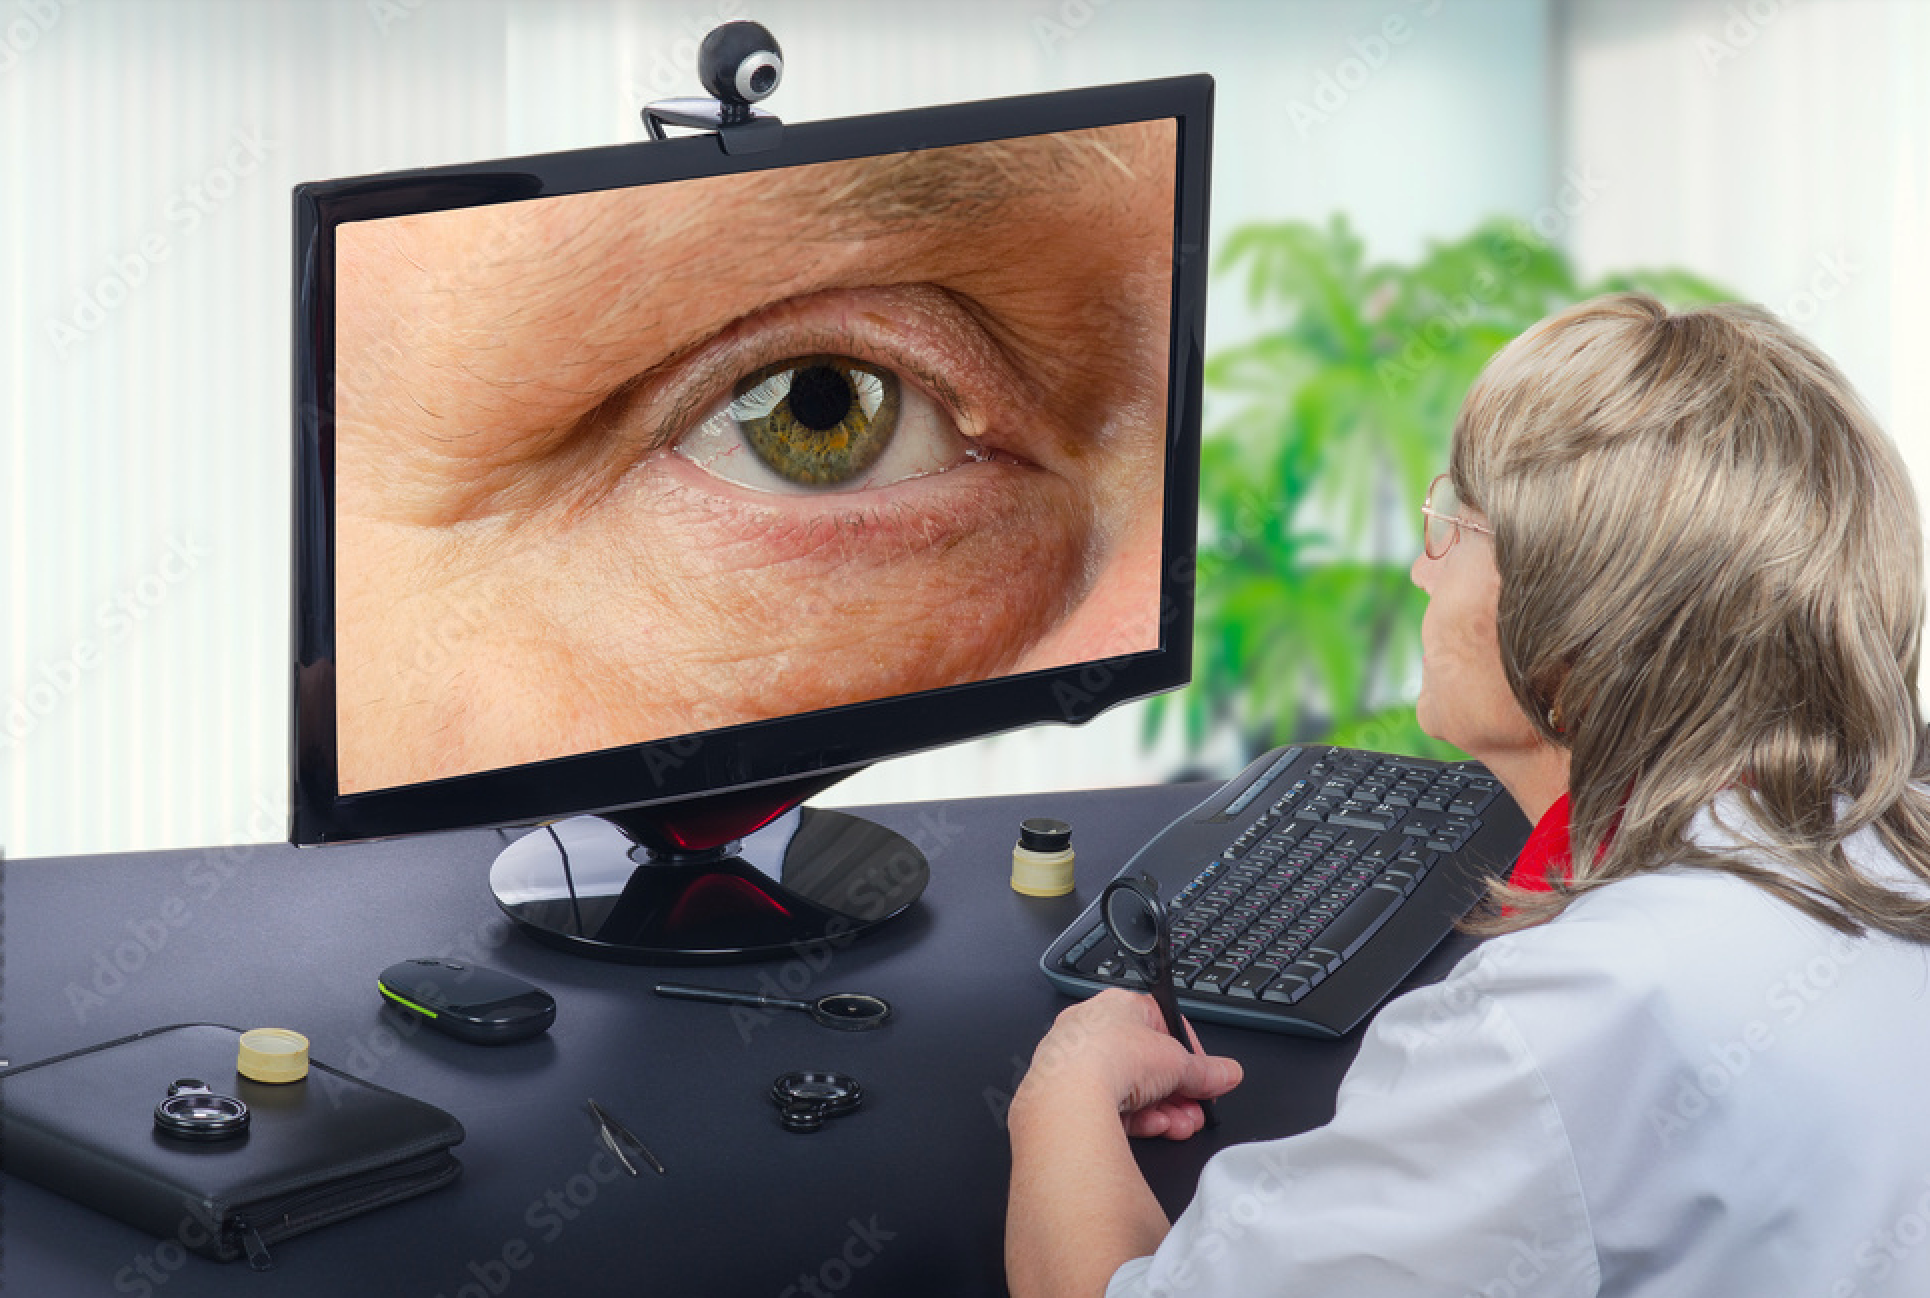 Helping patients navigate telehealth video visits benefits practice